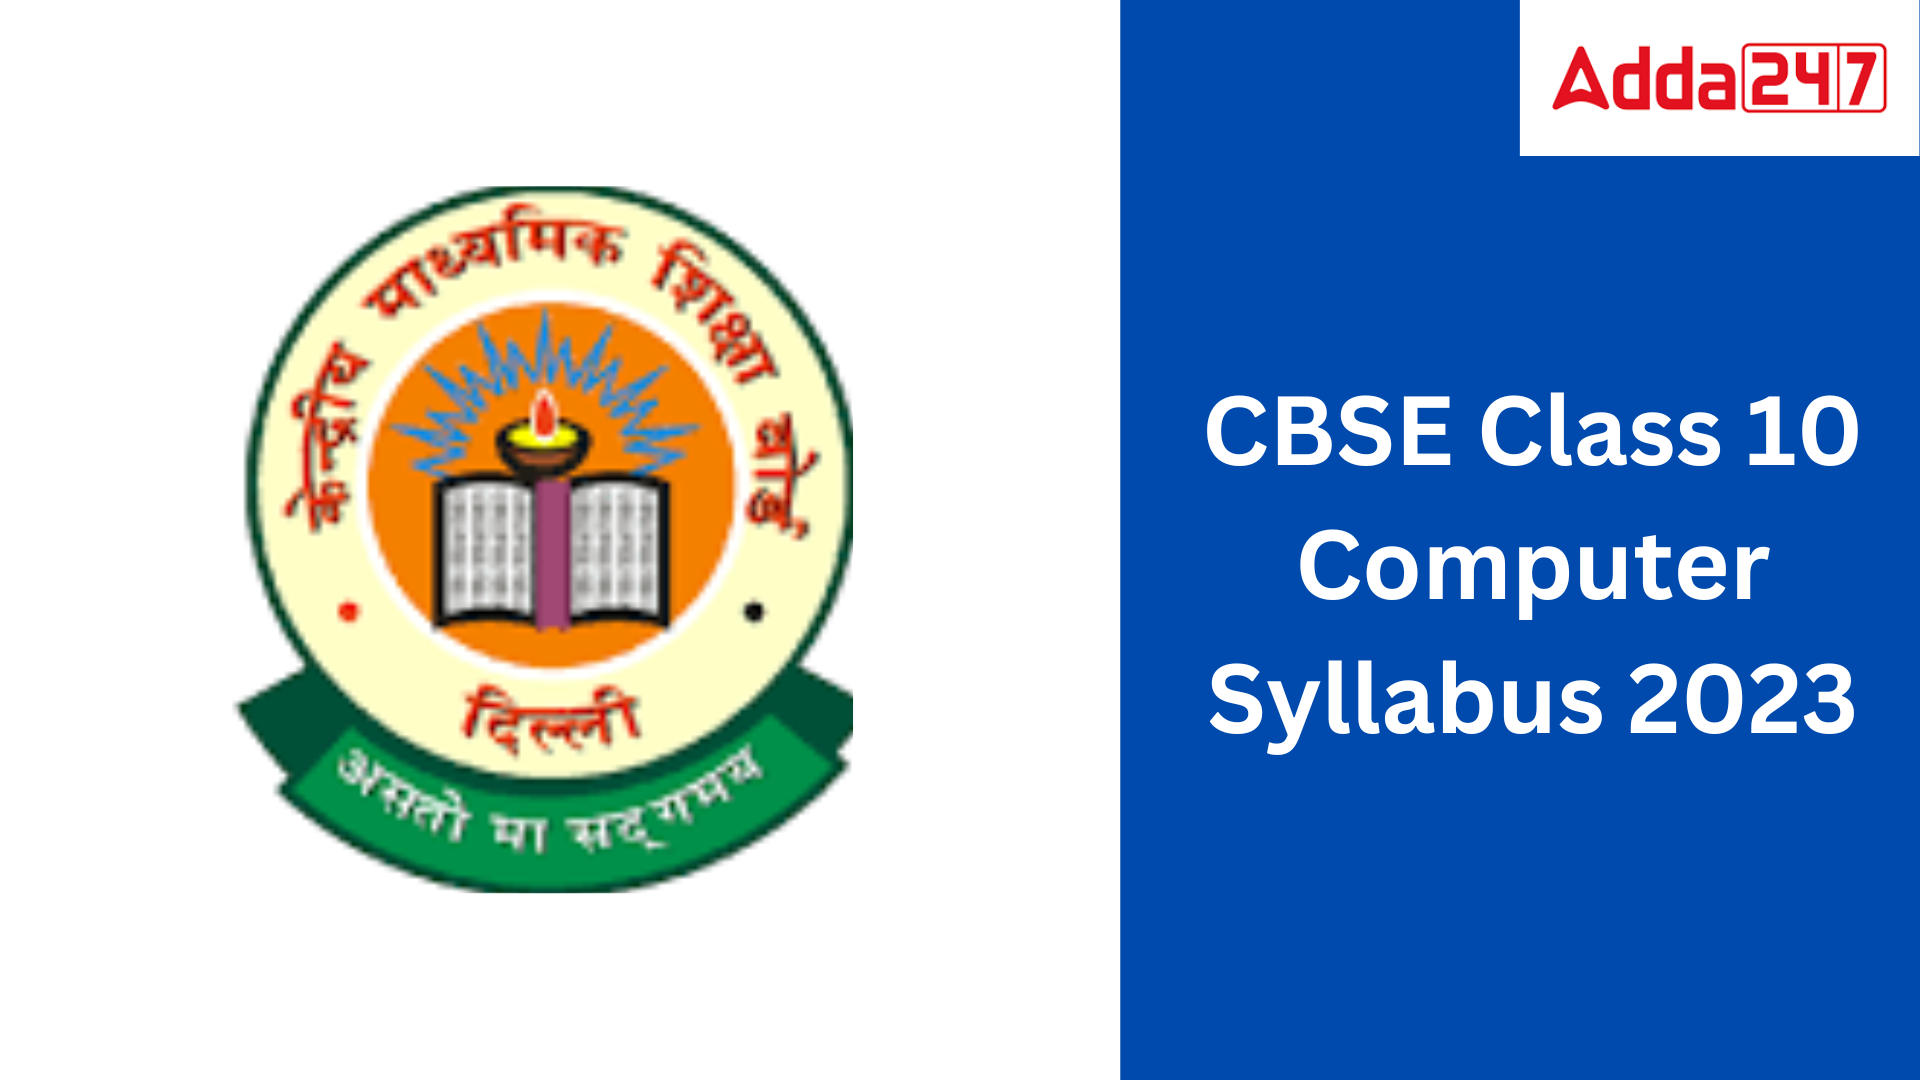 CBSE Class 10 Computer Syllabus 2023